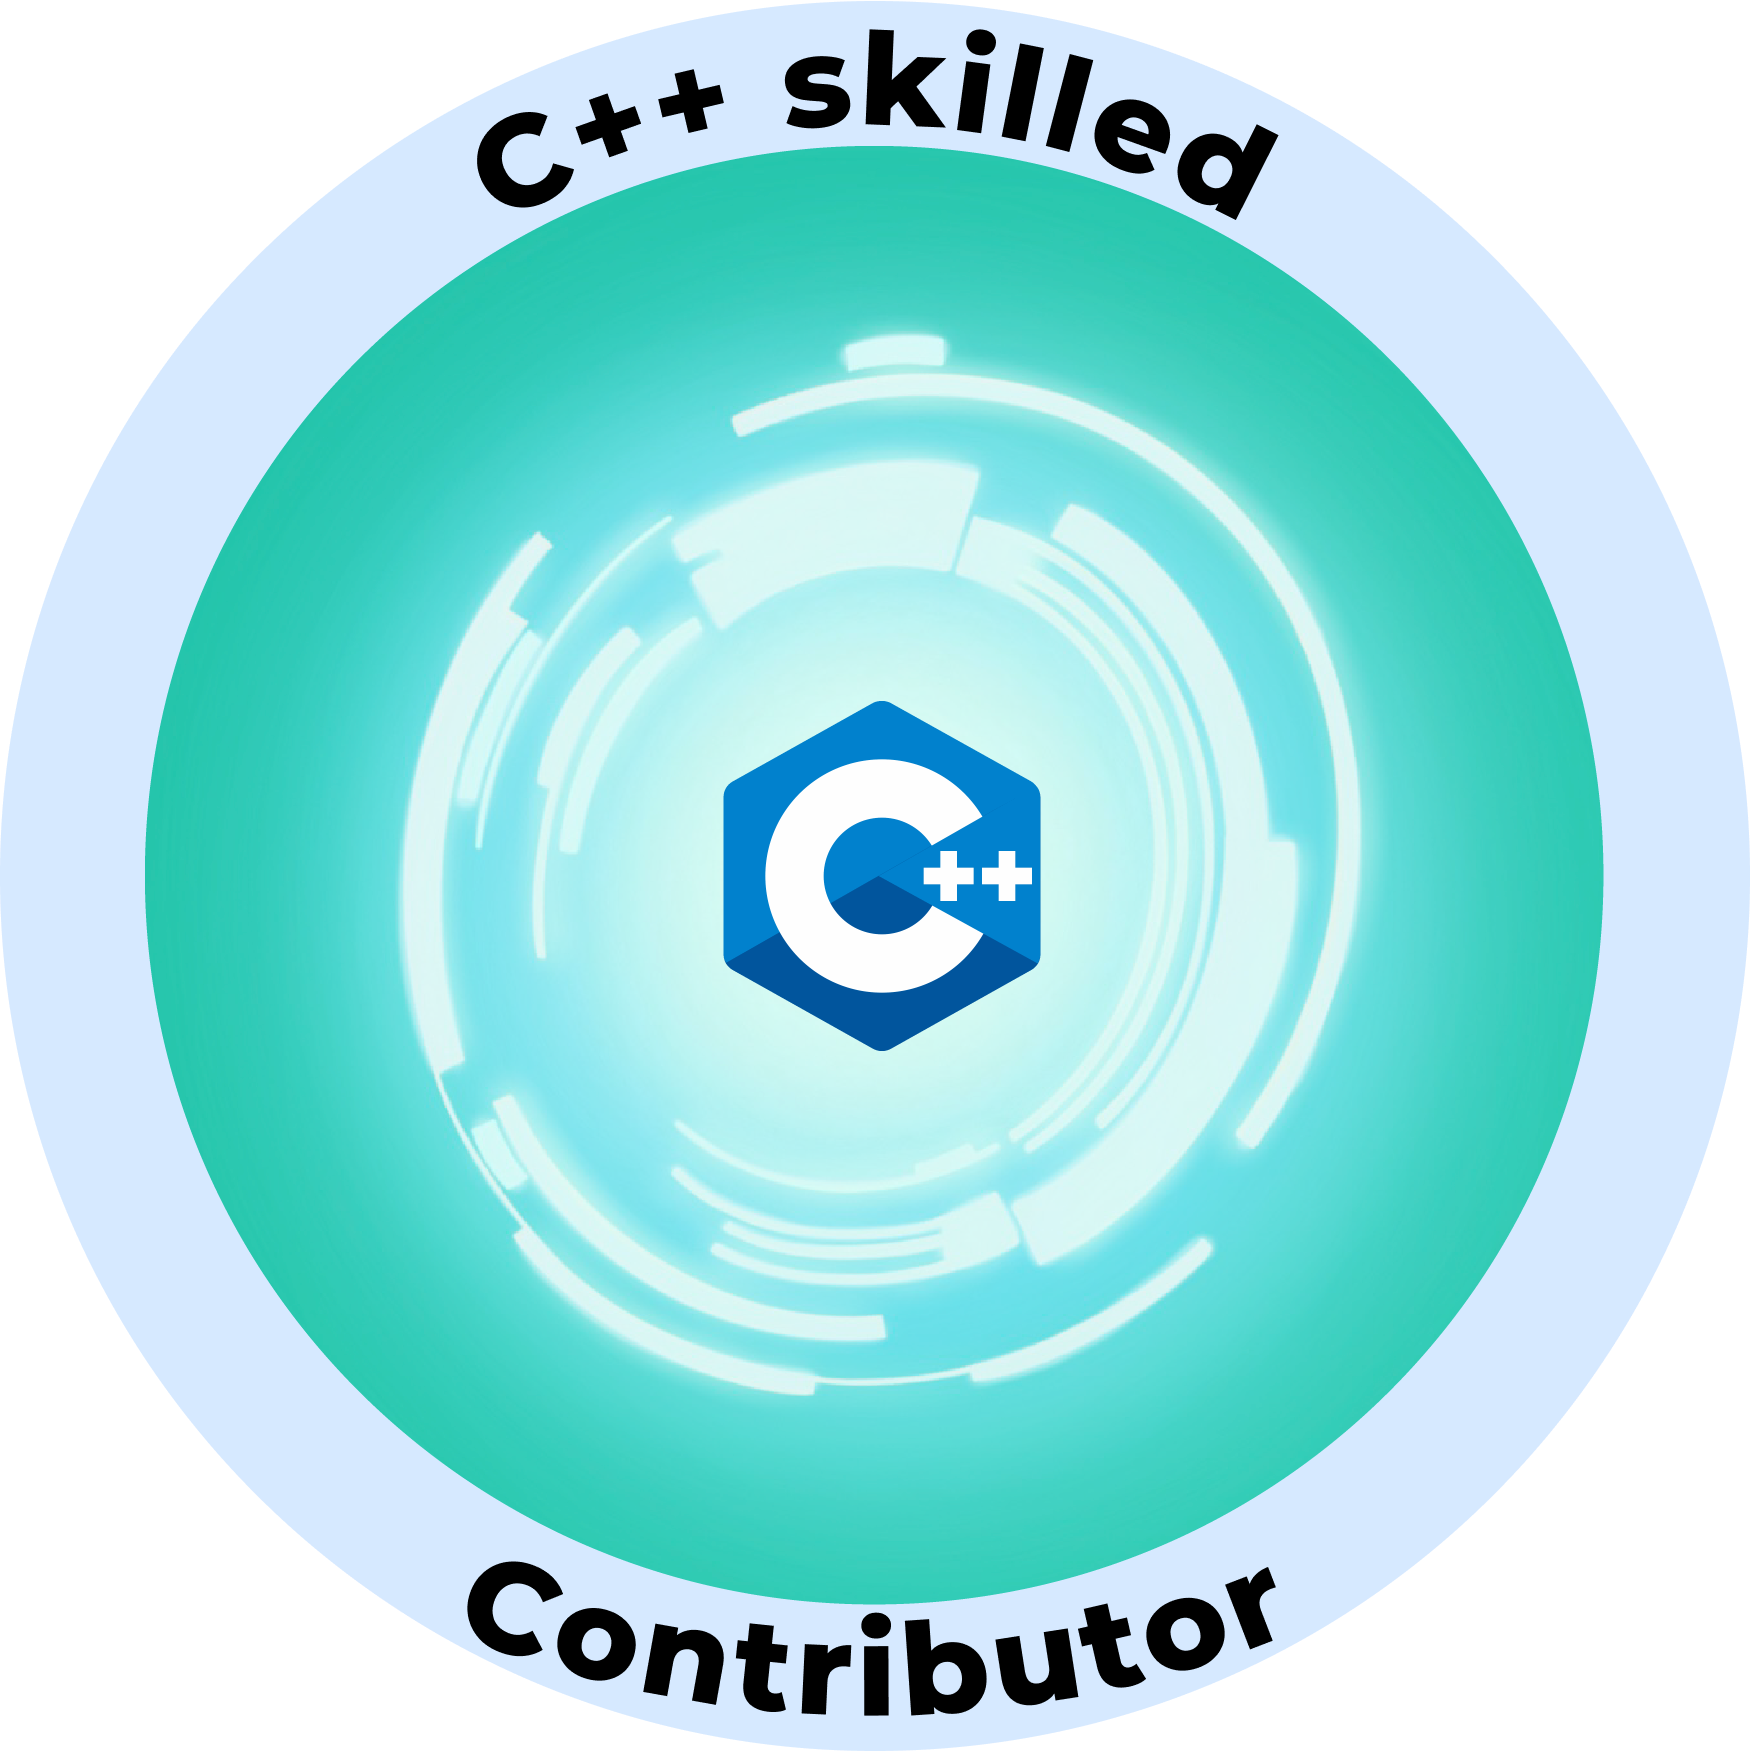 Web3 Badge | C++ Skilled Contributor logo